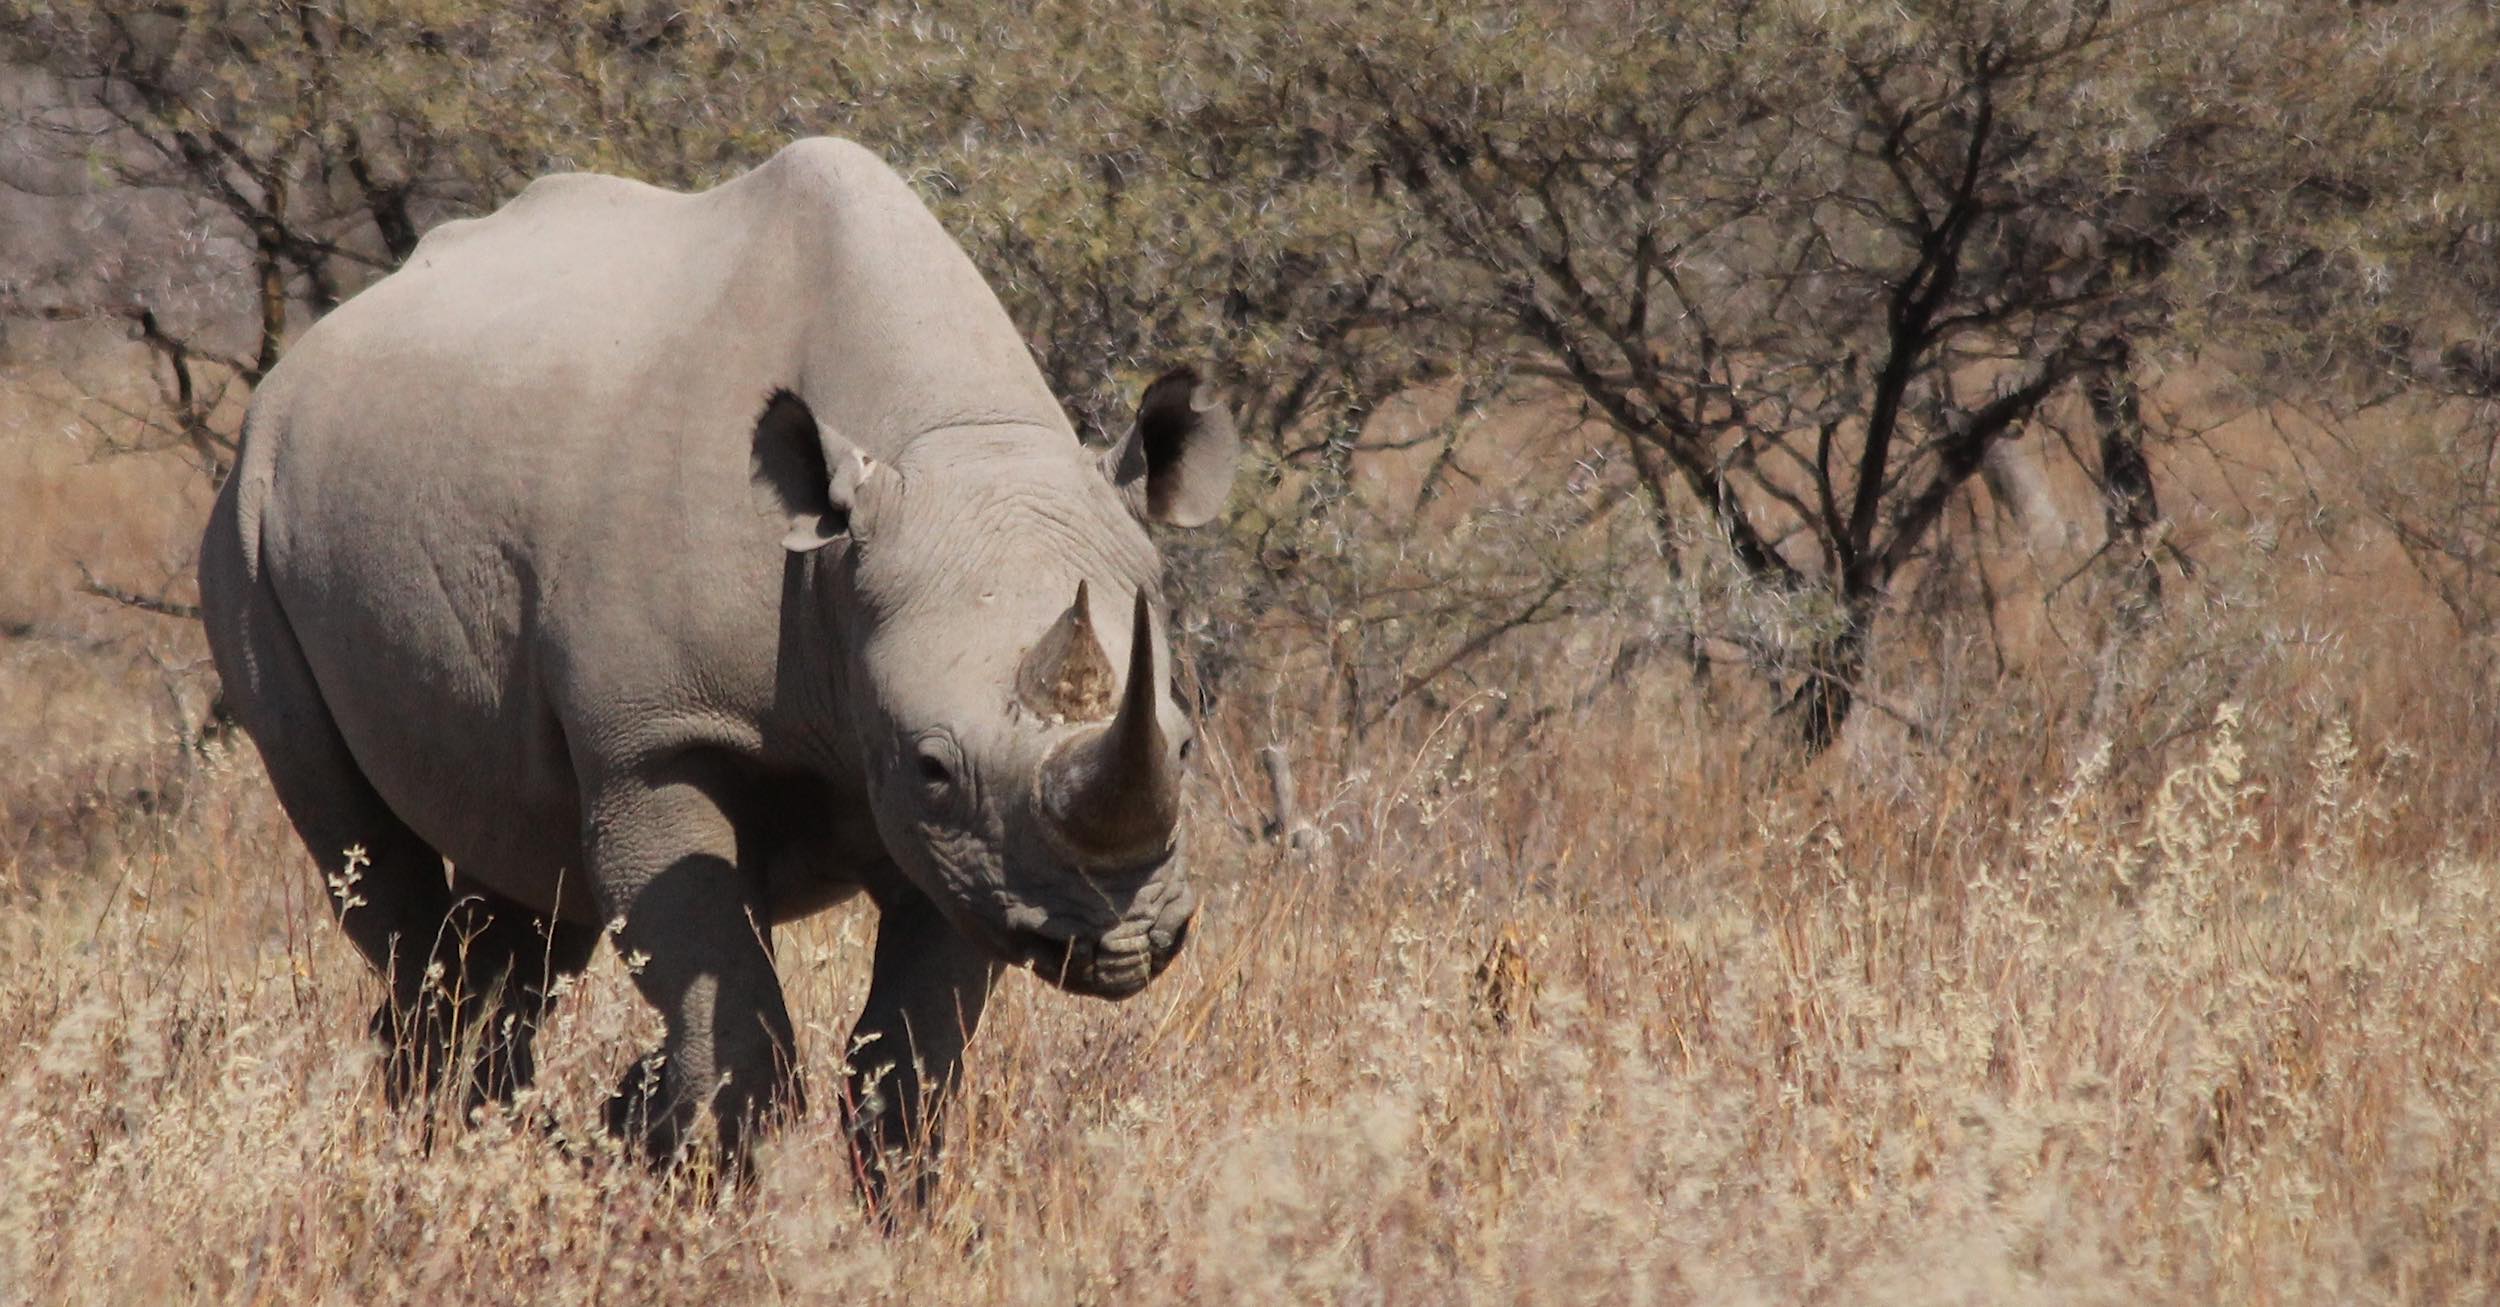 A black rhino in Etosha national park.